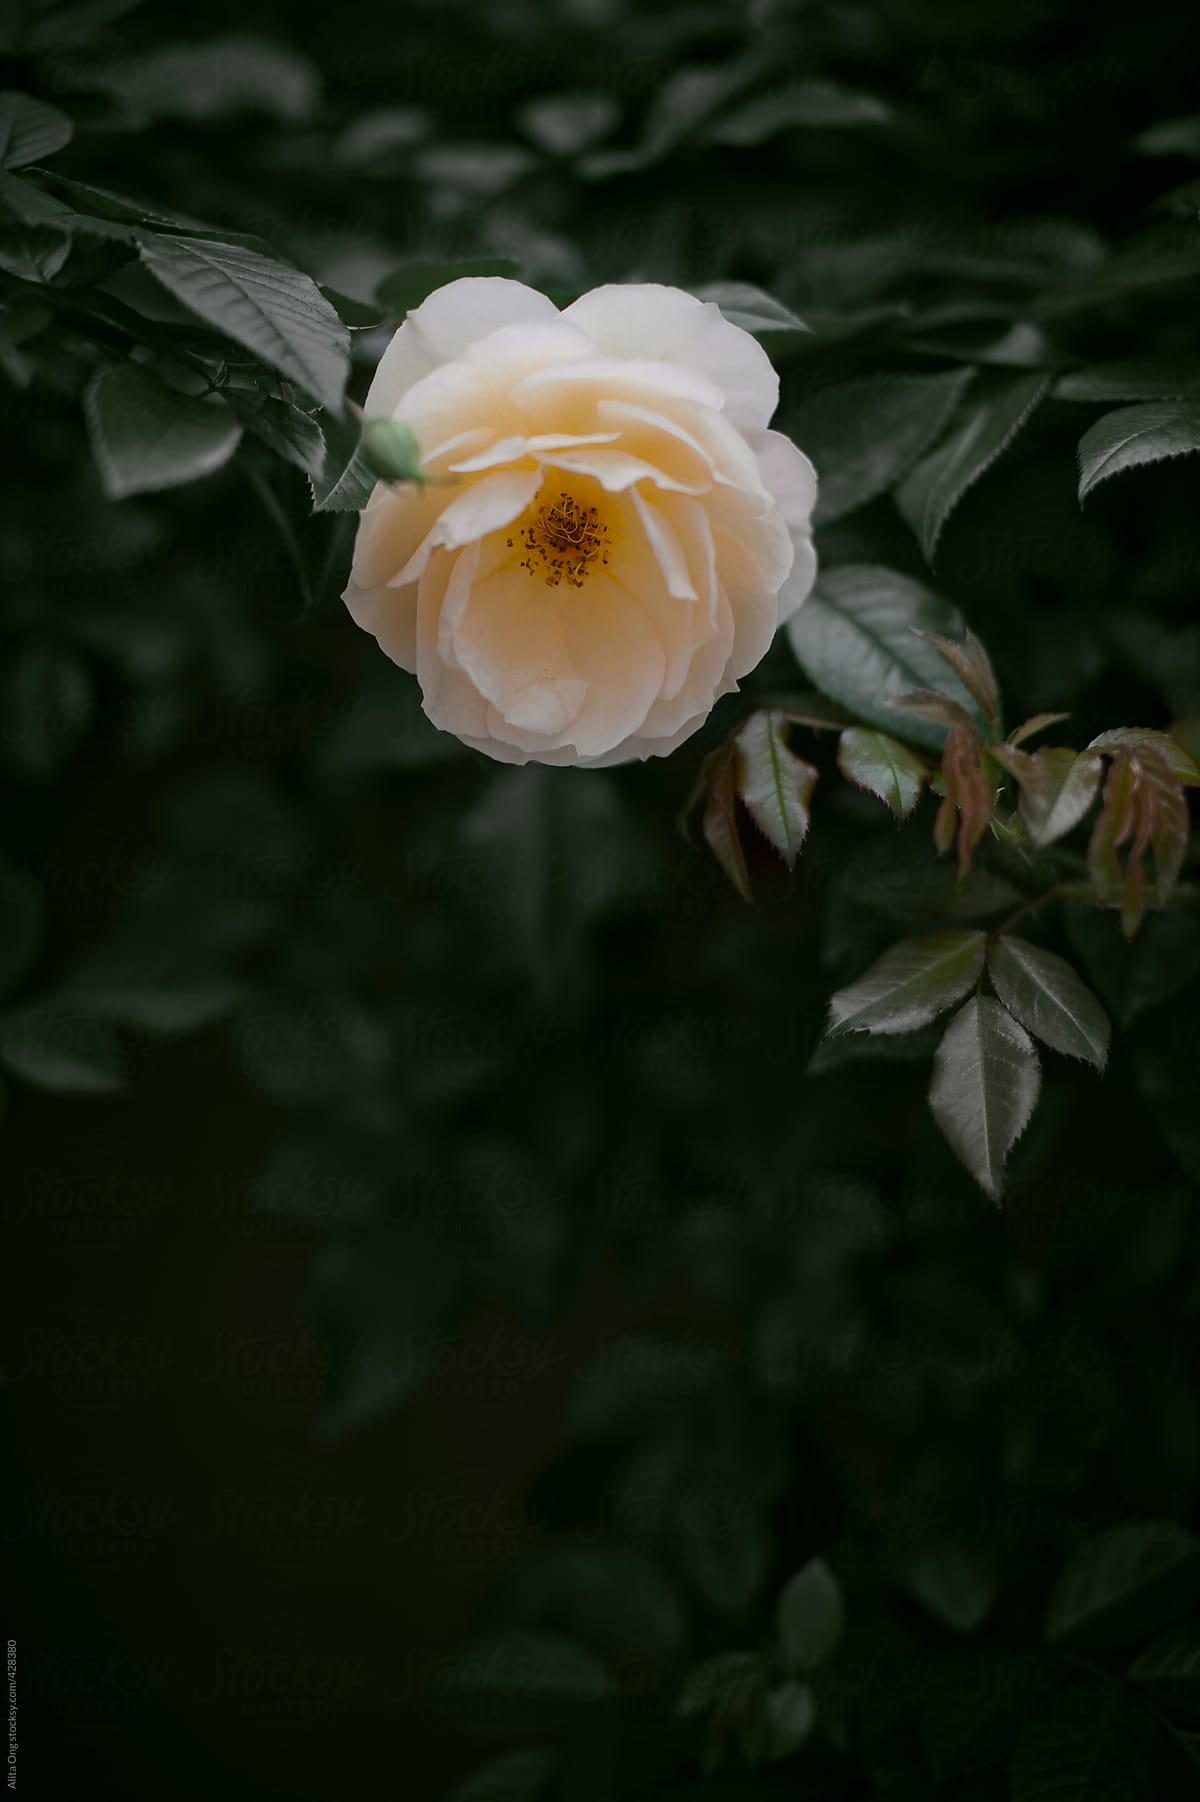 Single rose on dark background